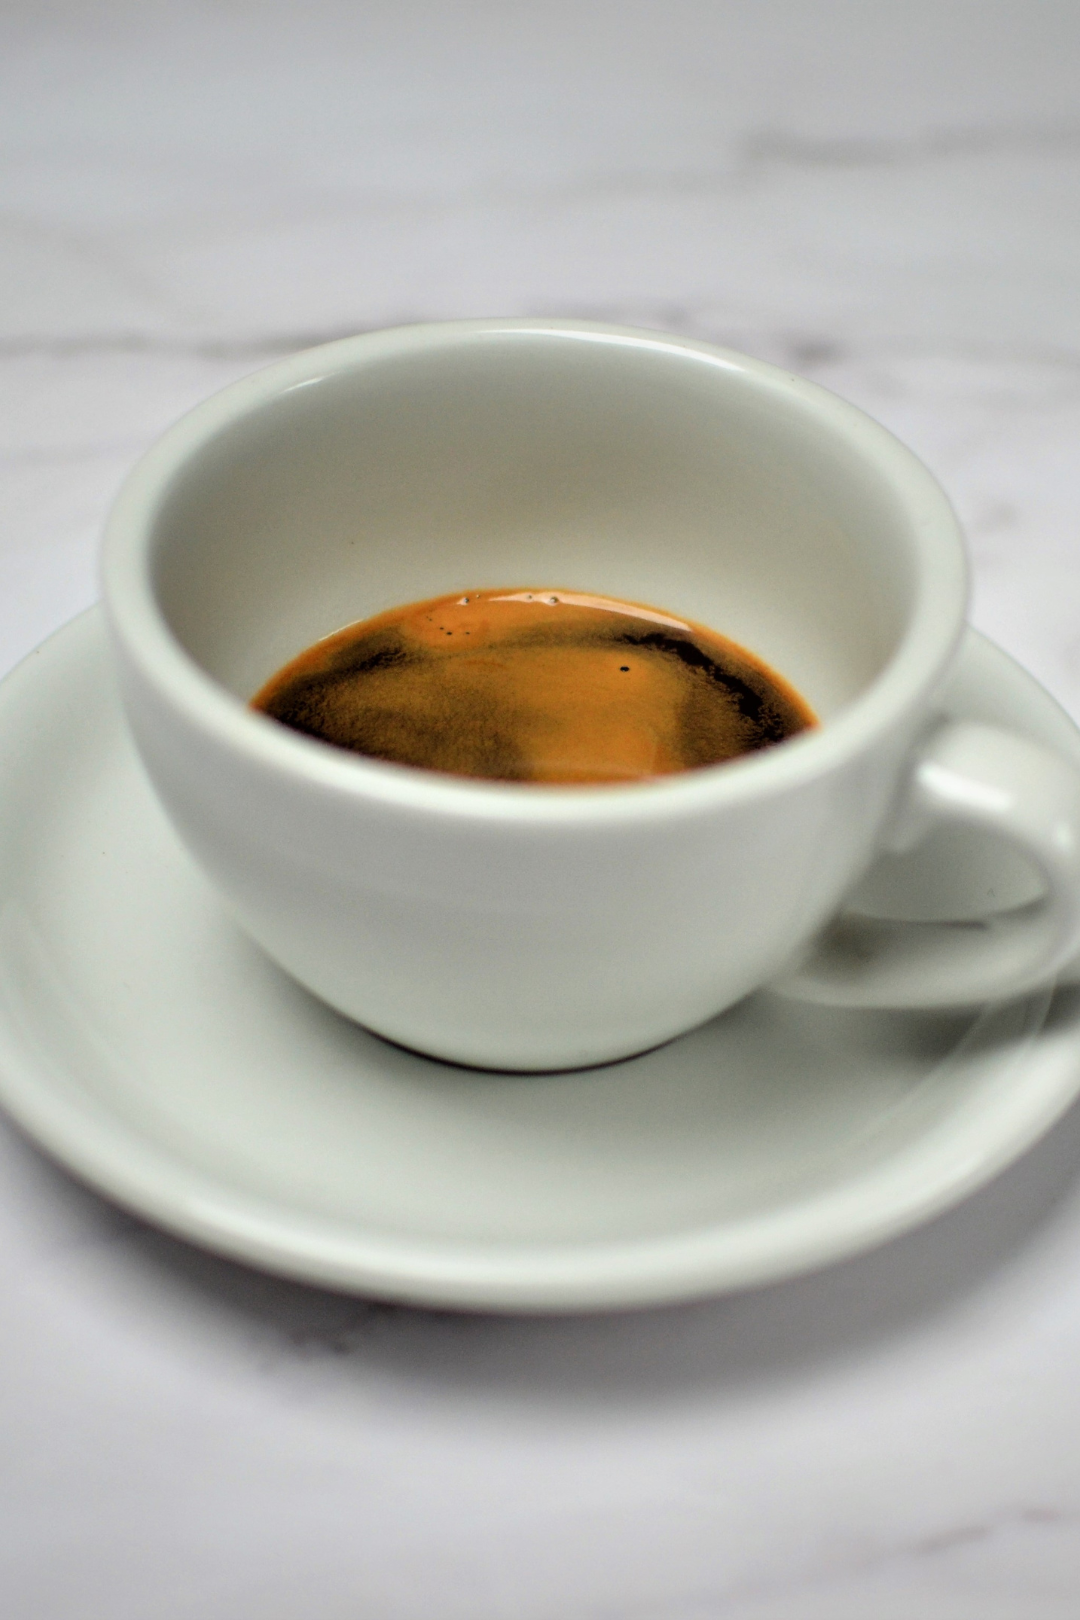 coffee at work, café bureau, Jura, espresso coffee, wholesale coffee, grains de café, koffie op het werk, b2b, company coffeeGust Coffee Roasters